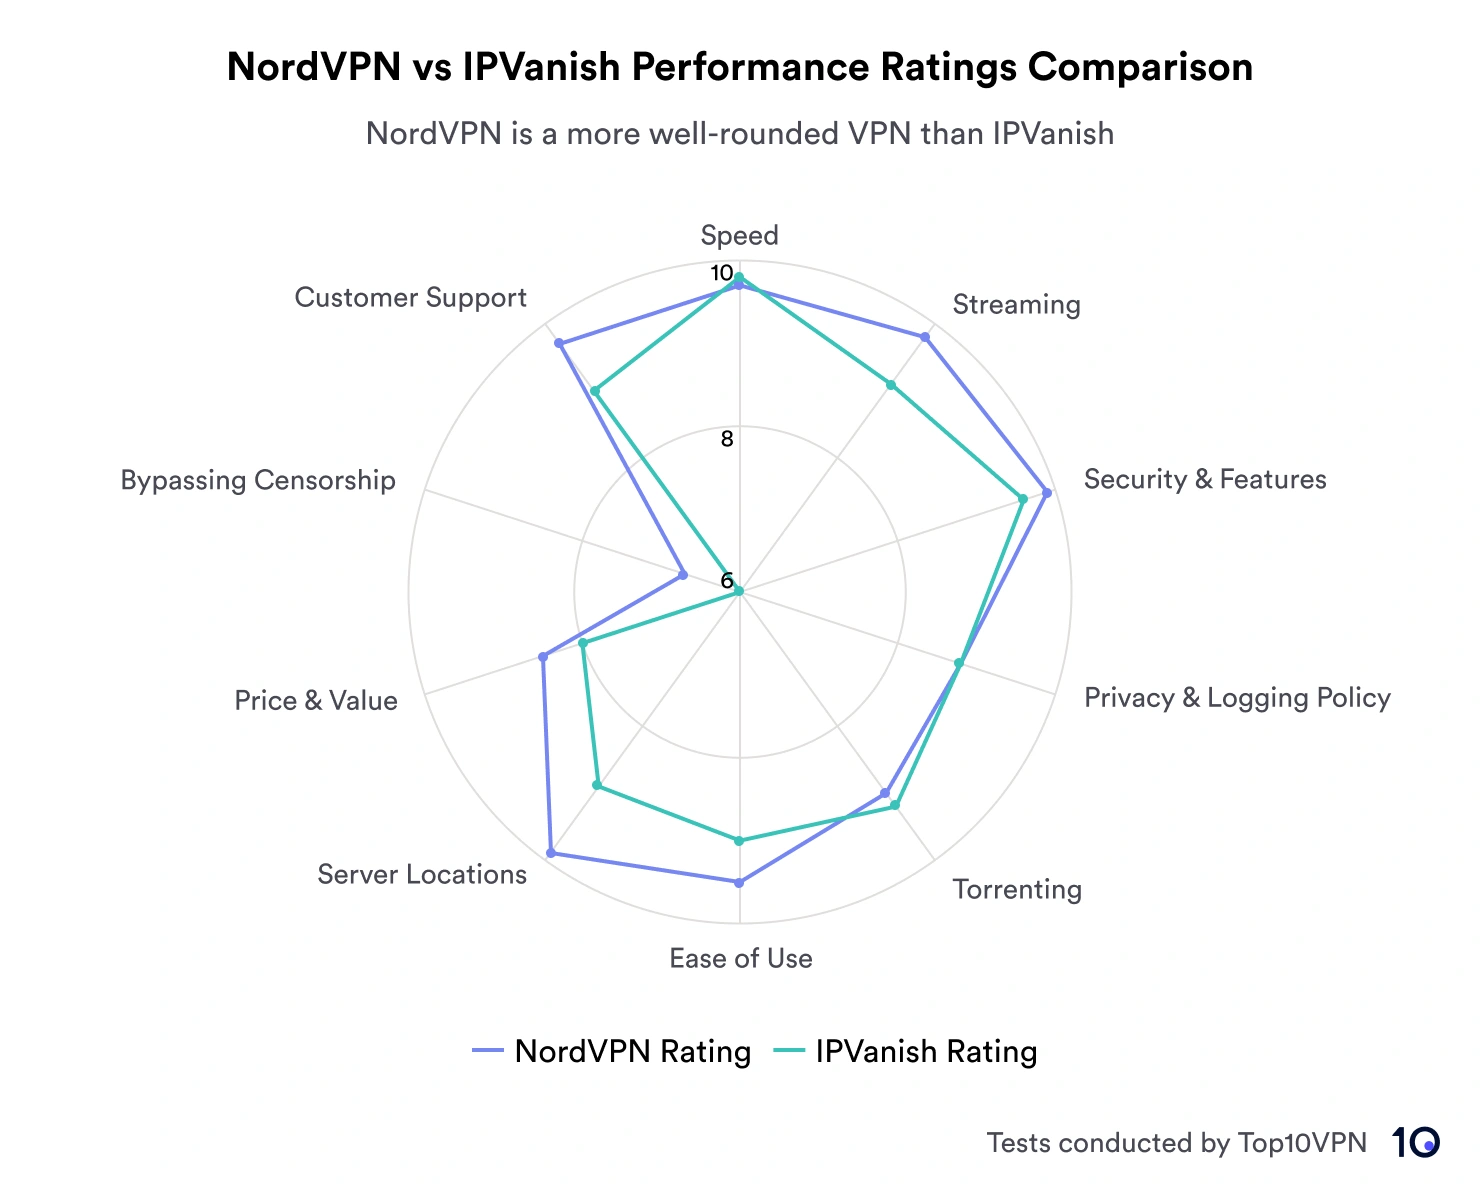 Radar chart comparing NordVPN's and IPVanish's performance ratings